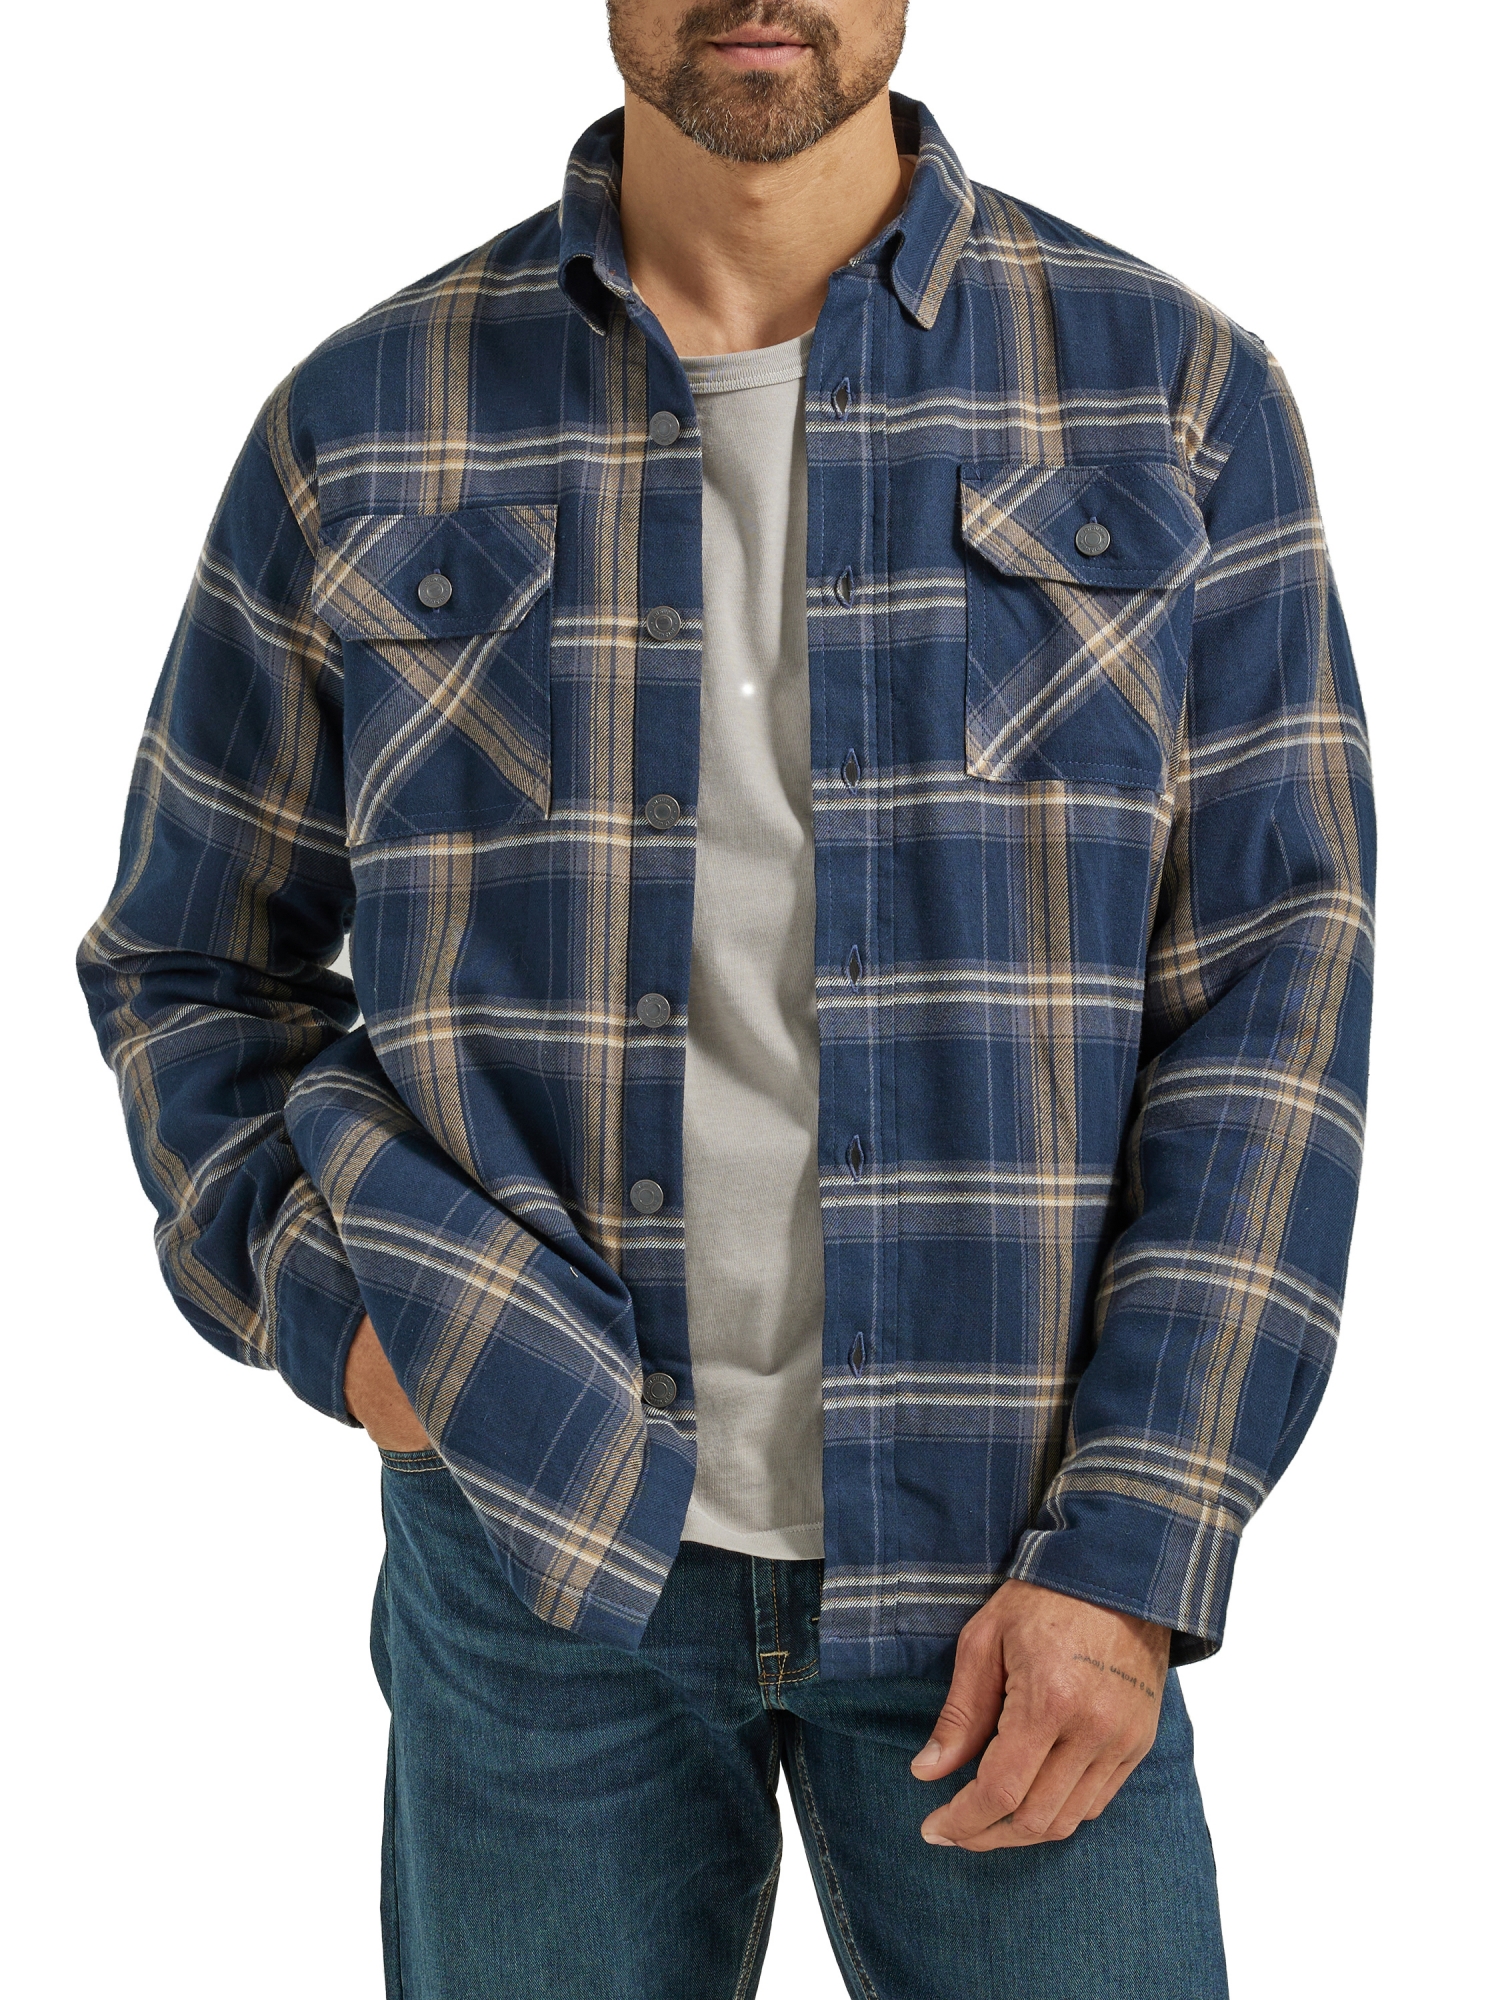 Wrangler Men's Long Sleeve Heavyweight Shirt - image 1 of 8